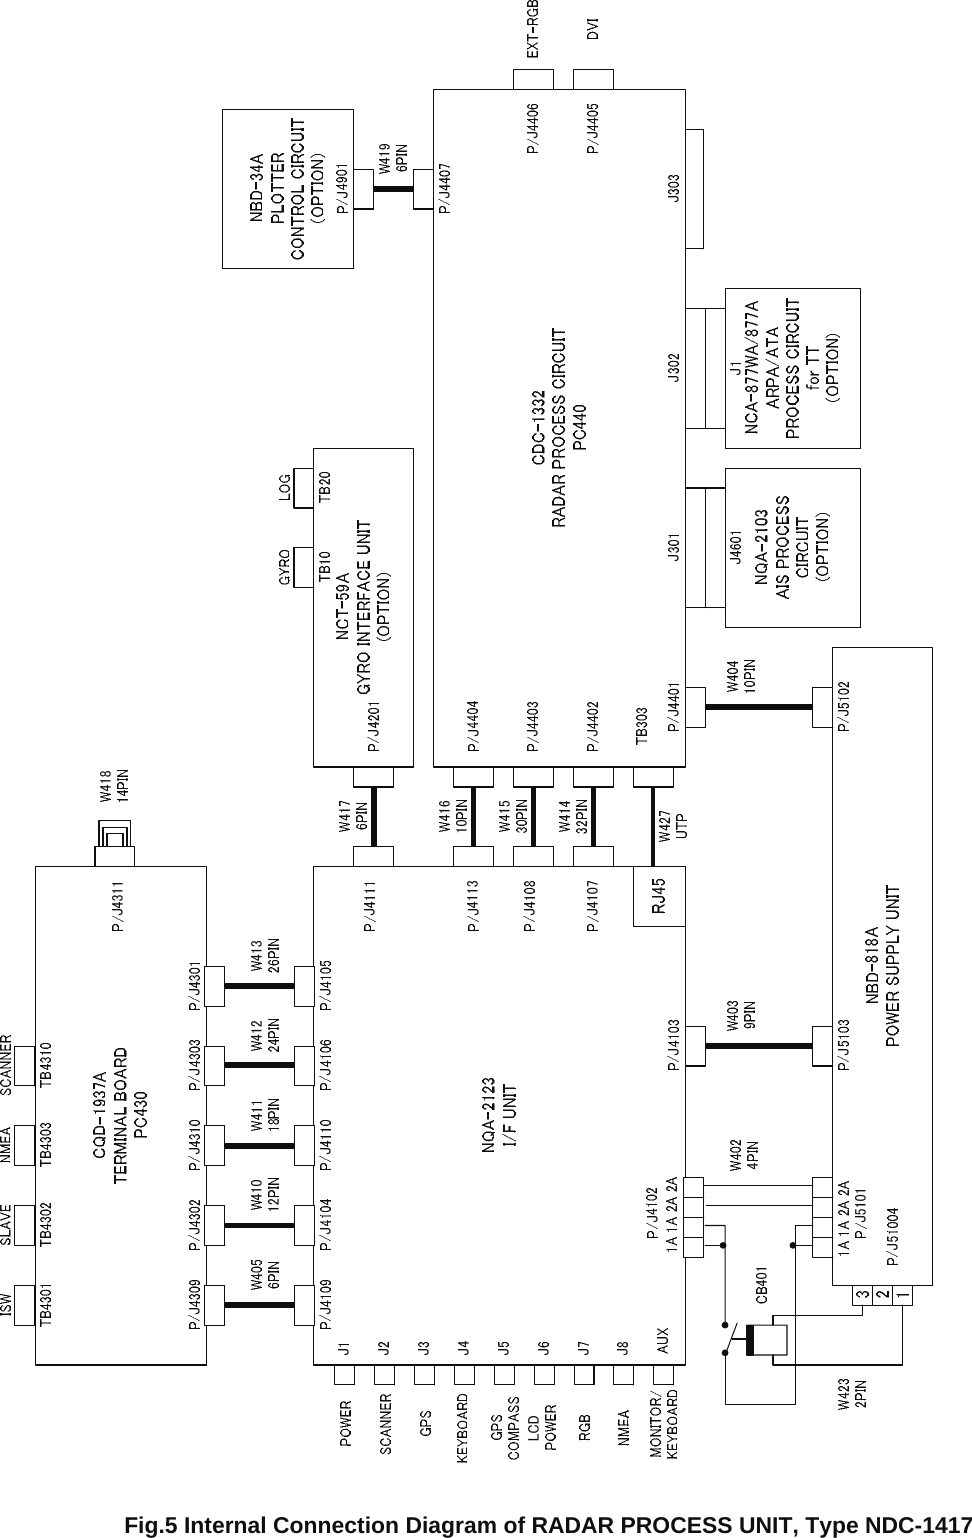 Fig.5 Internal Connection Diagram of RADAR PROCESS UNIT, Type NDC-1417